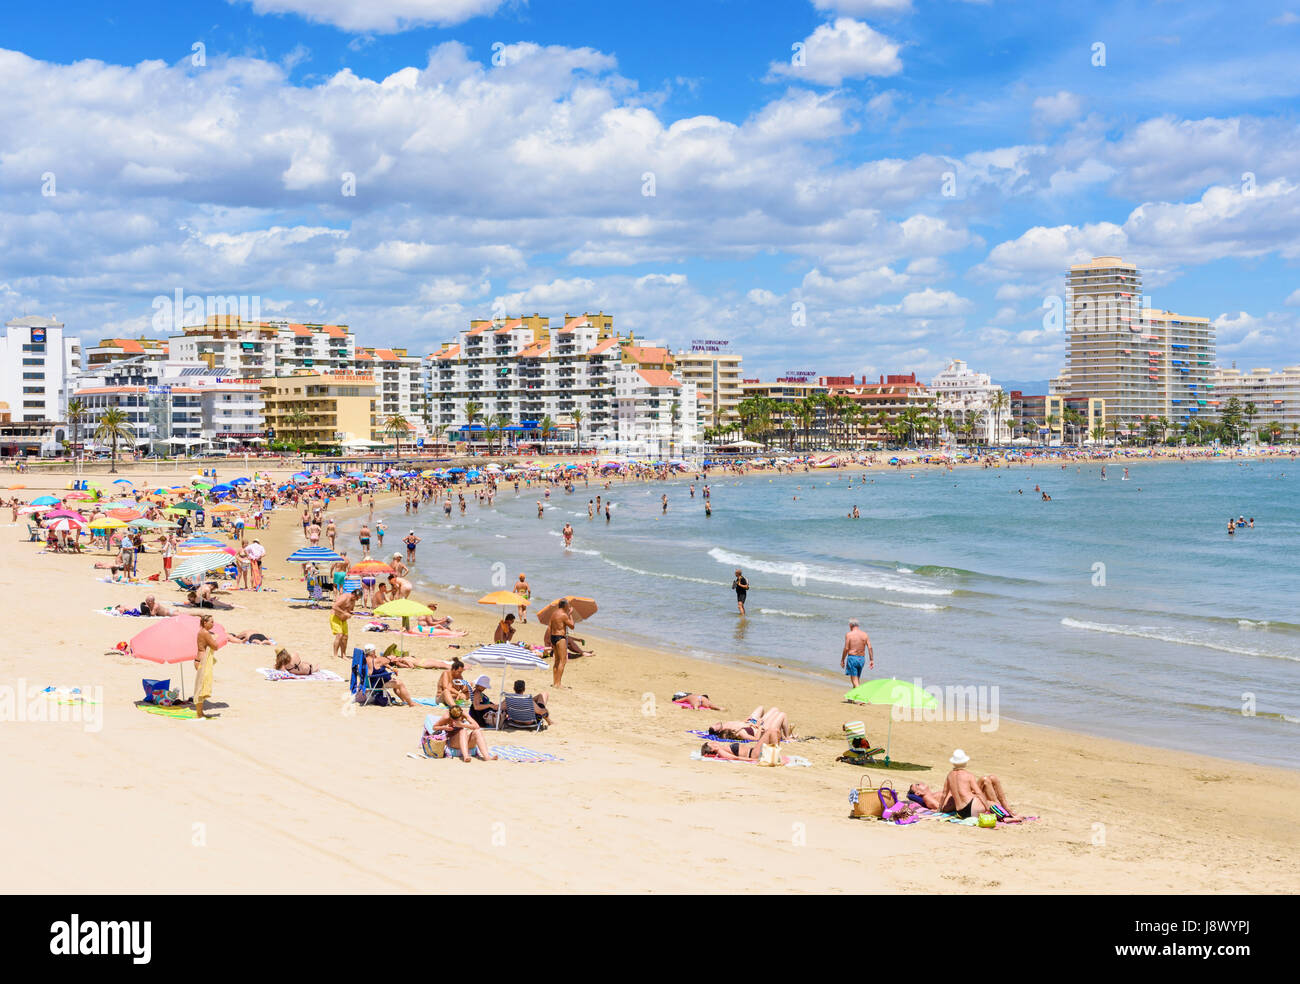 Crowded beach scene on popular soft sand of Playa Norte, Peniscola, Spain Stock Photo